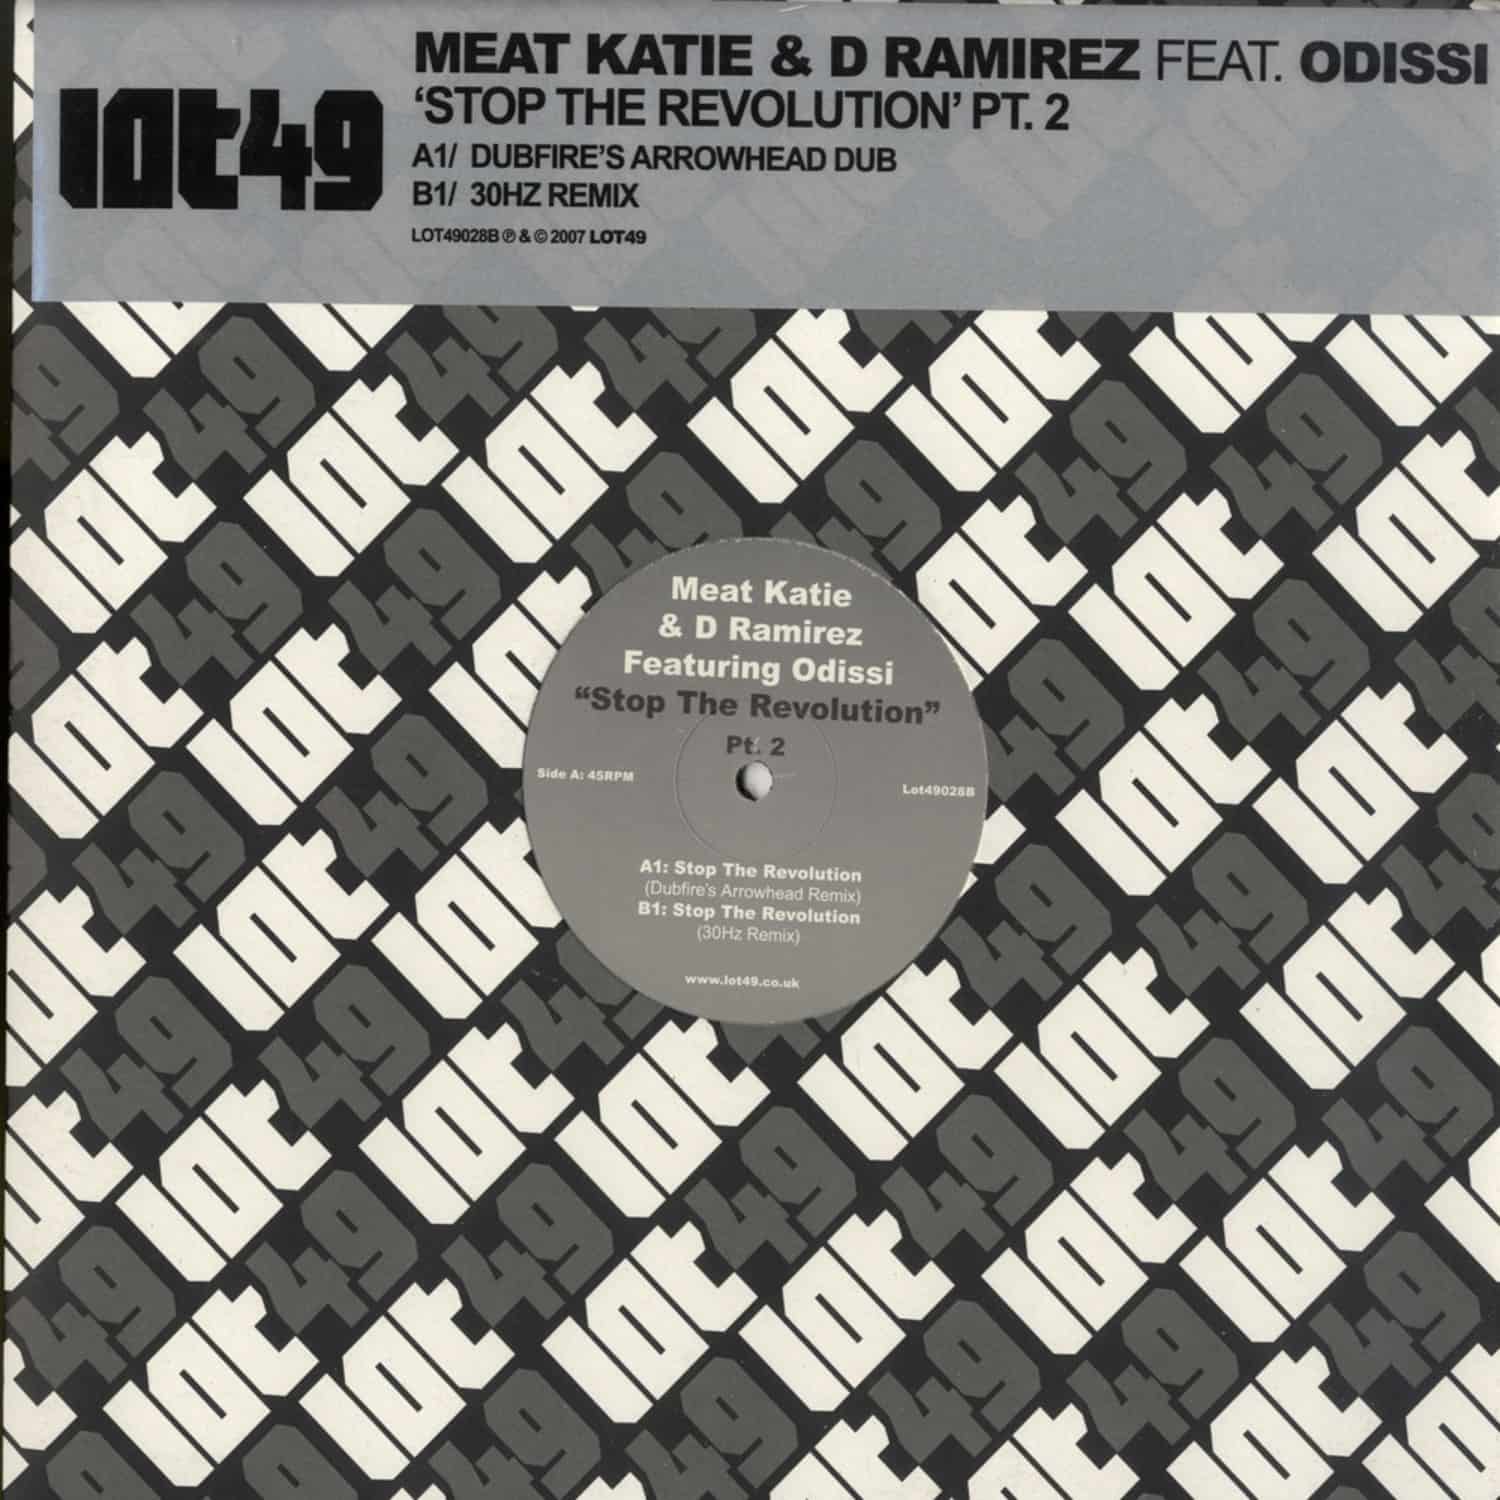 Meat Katie & D.Ramirez feat. Odissi - STOP THE REVOLUTION PART 2 